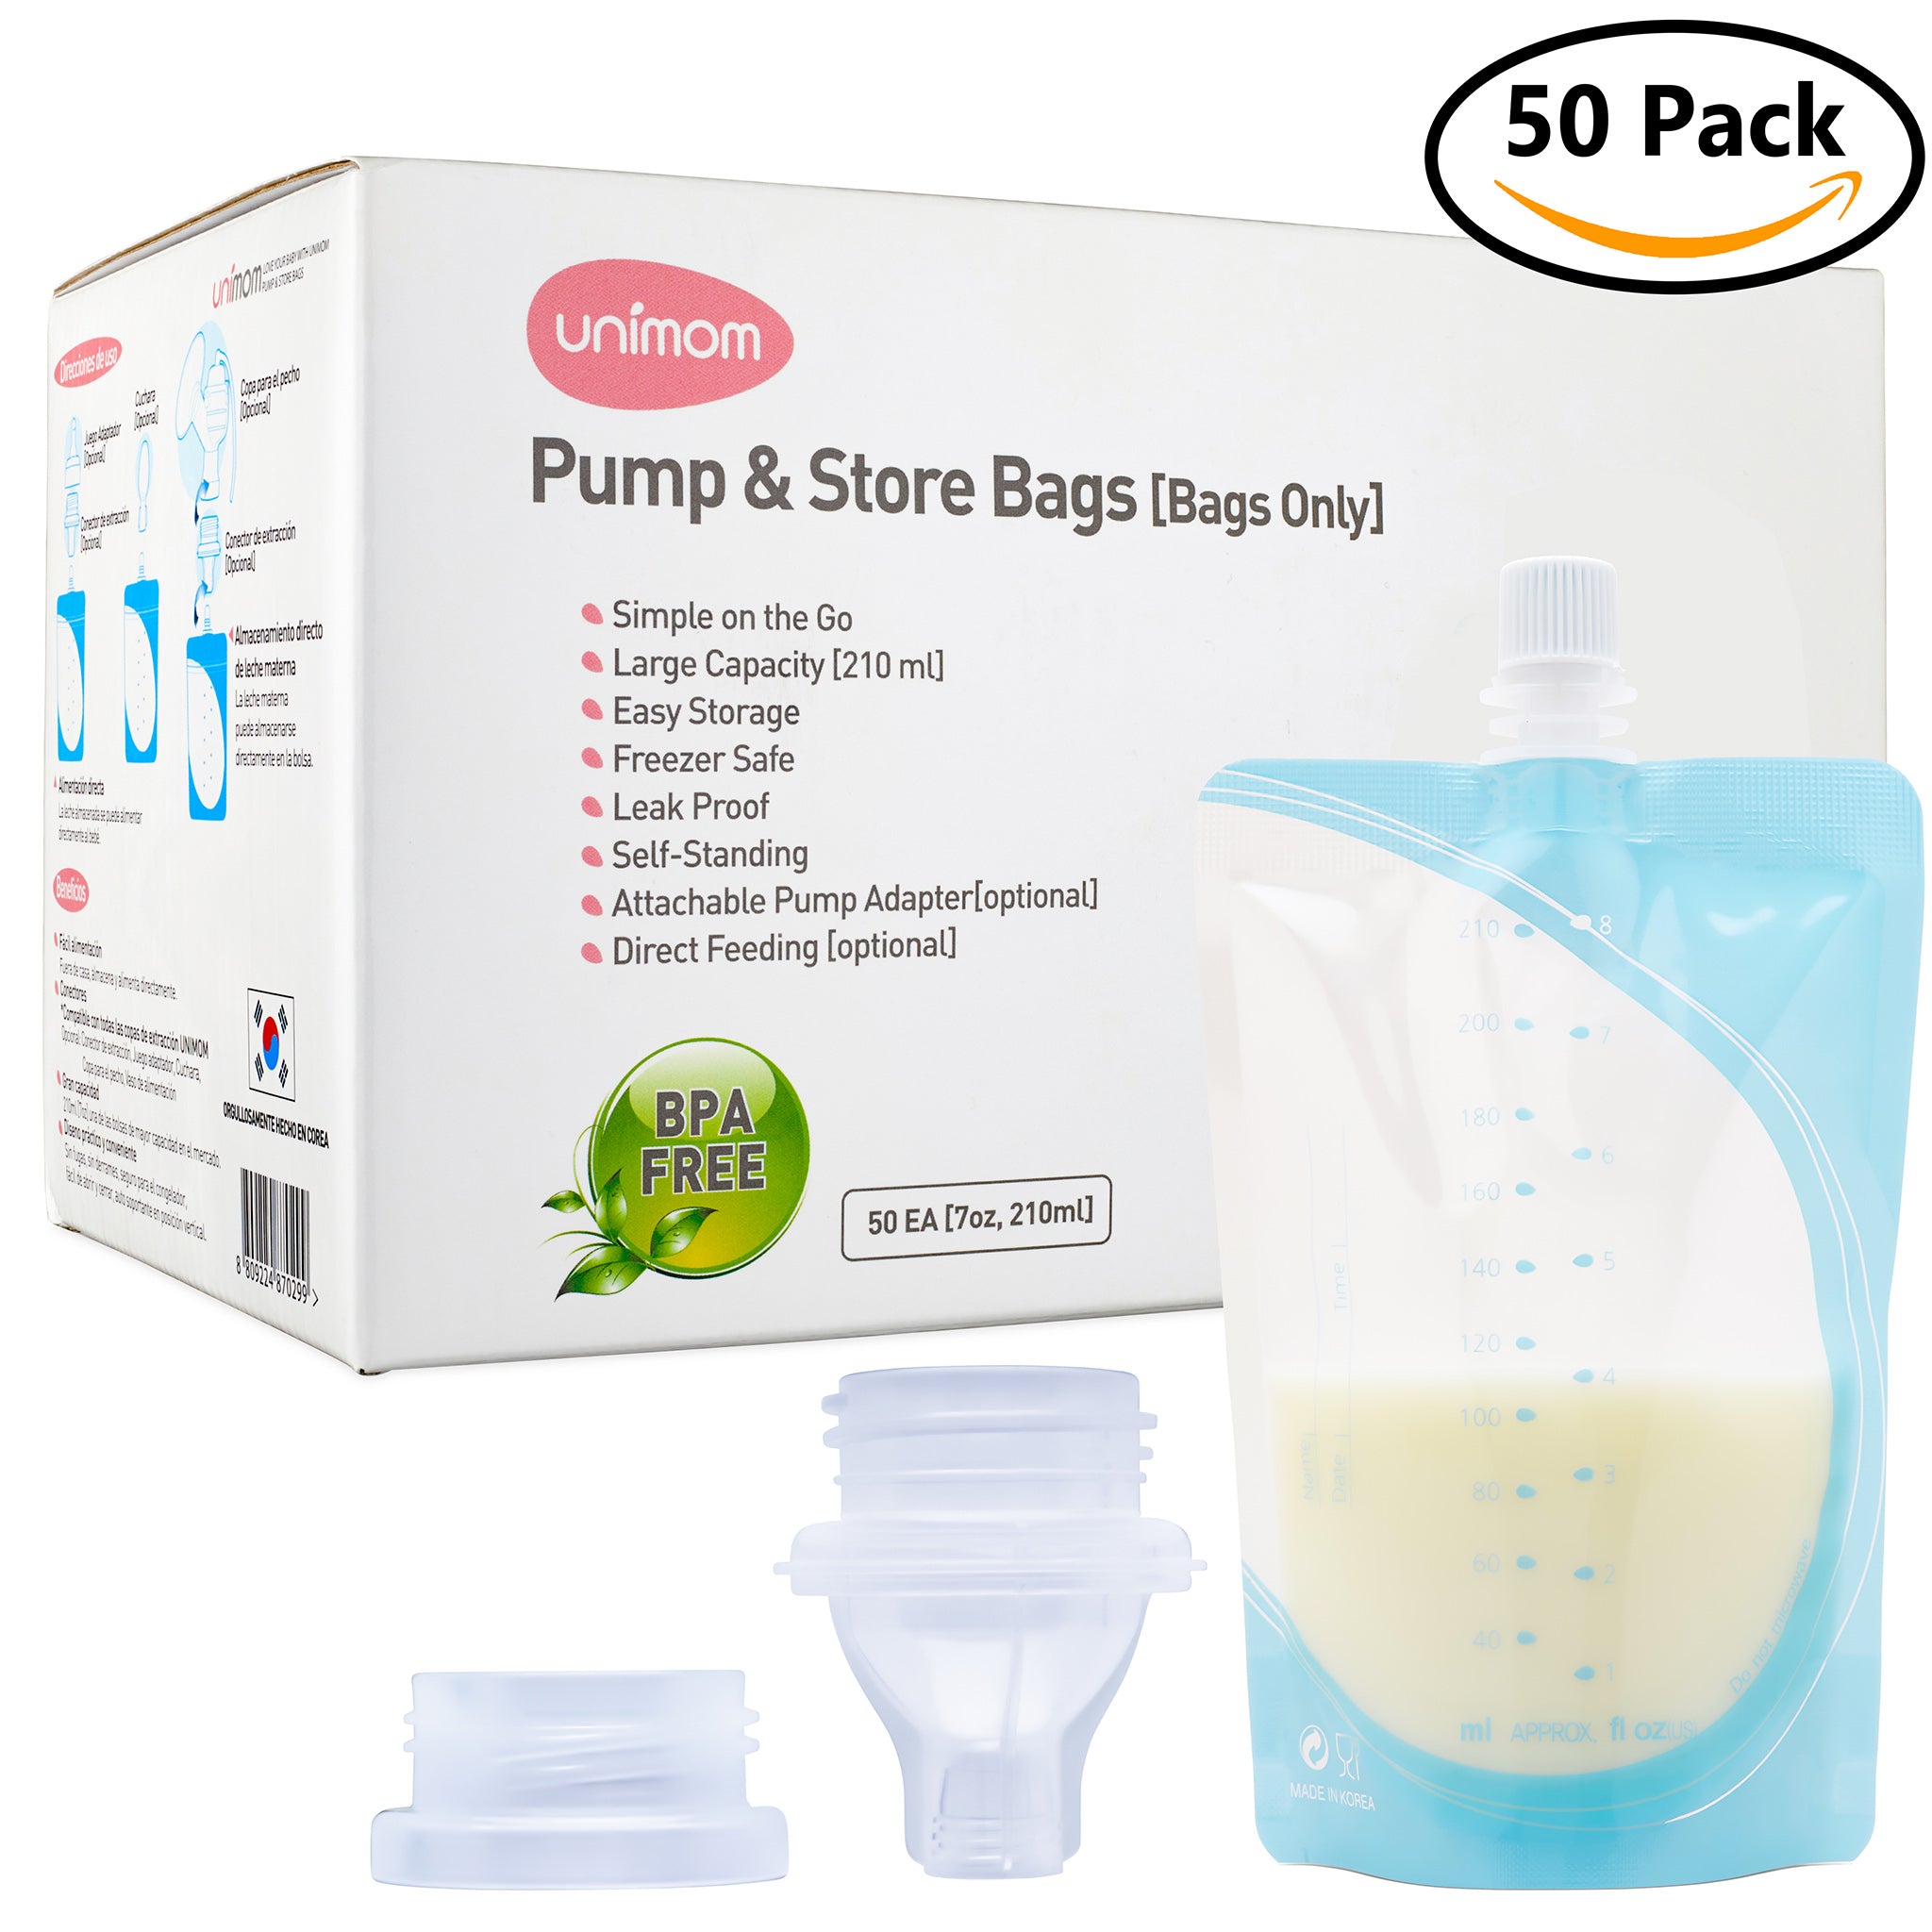 Bolsas leche materna Unimom (50un) – baby lab sleep